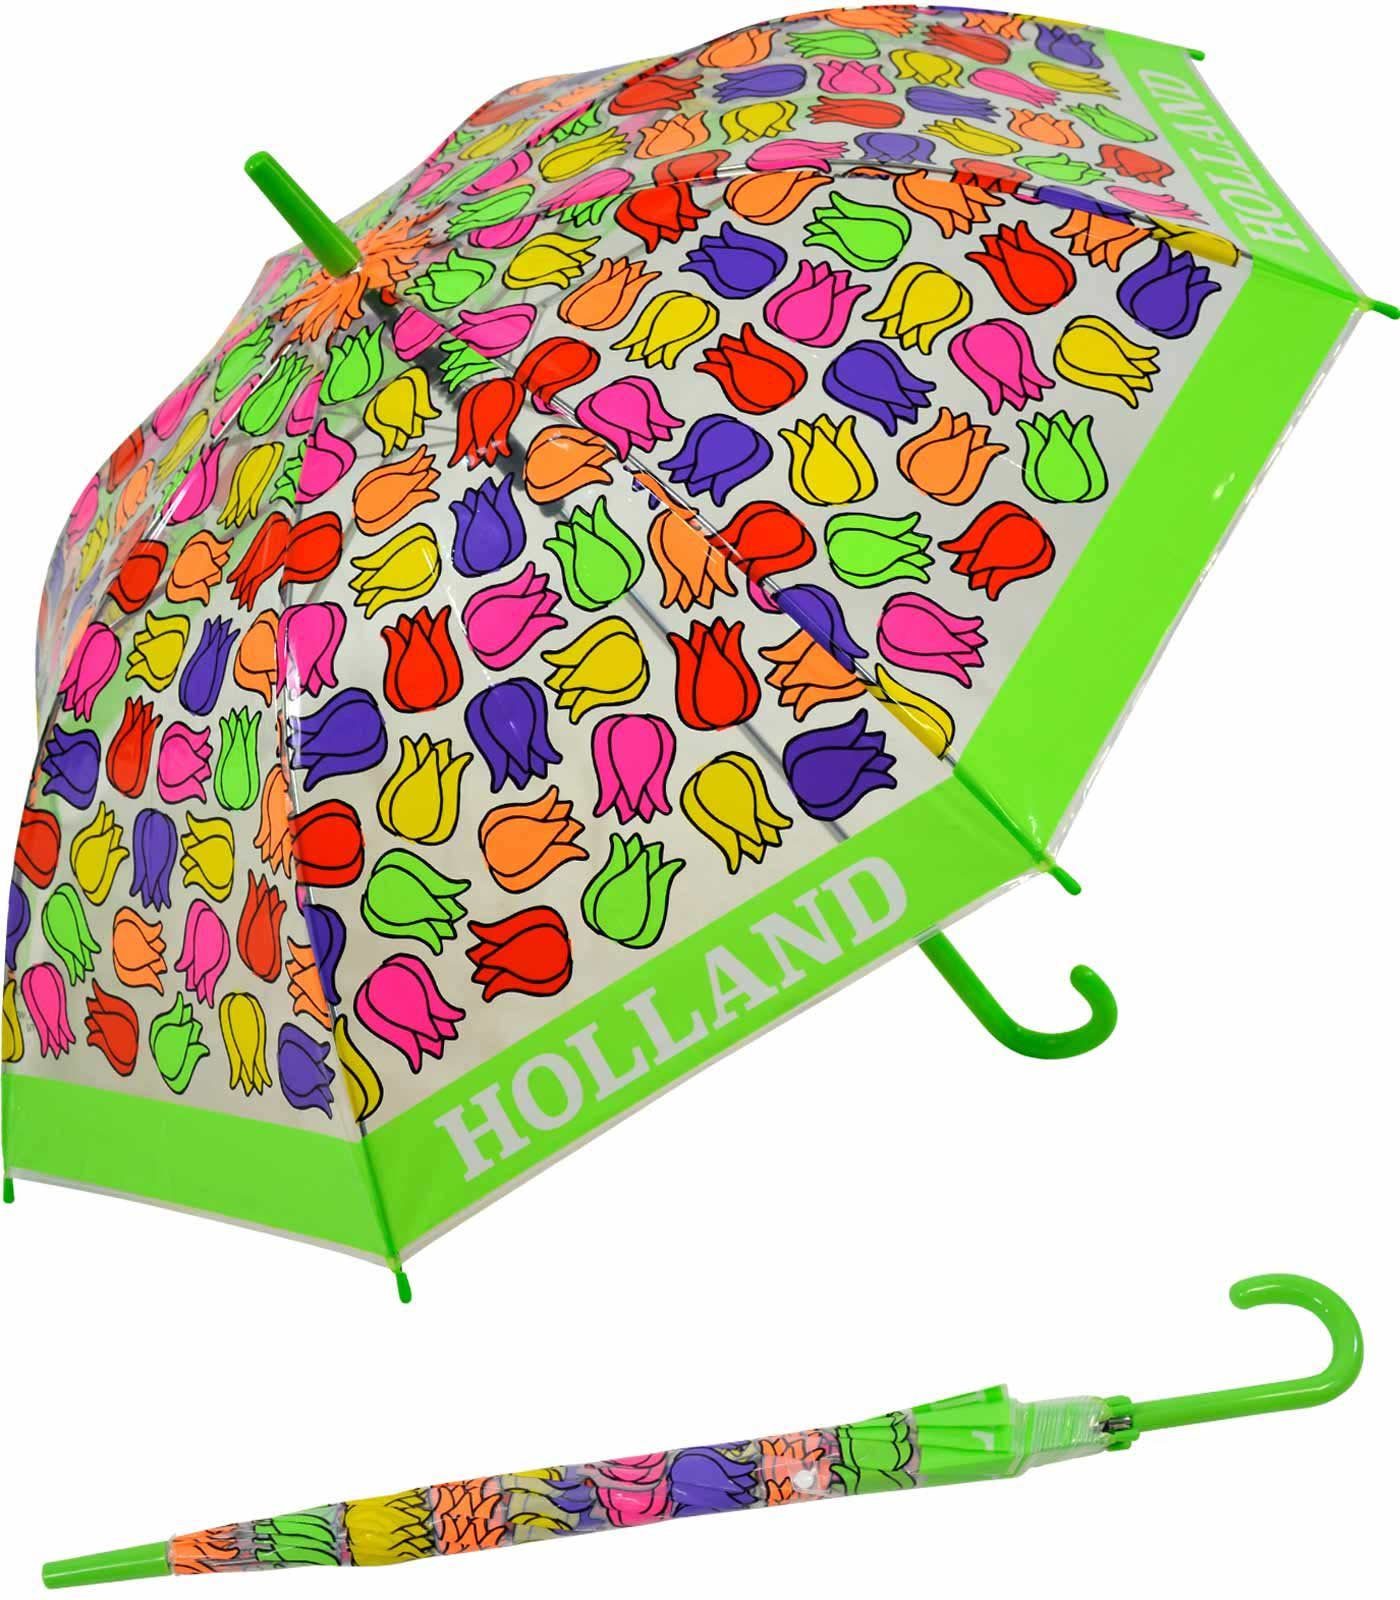 Impliva Langregenschirm Falconetti Kinderschirm bunt transparent - Tulpen, durchsichtig grün